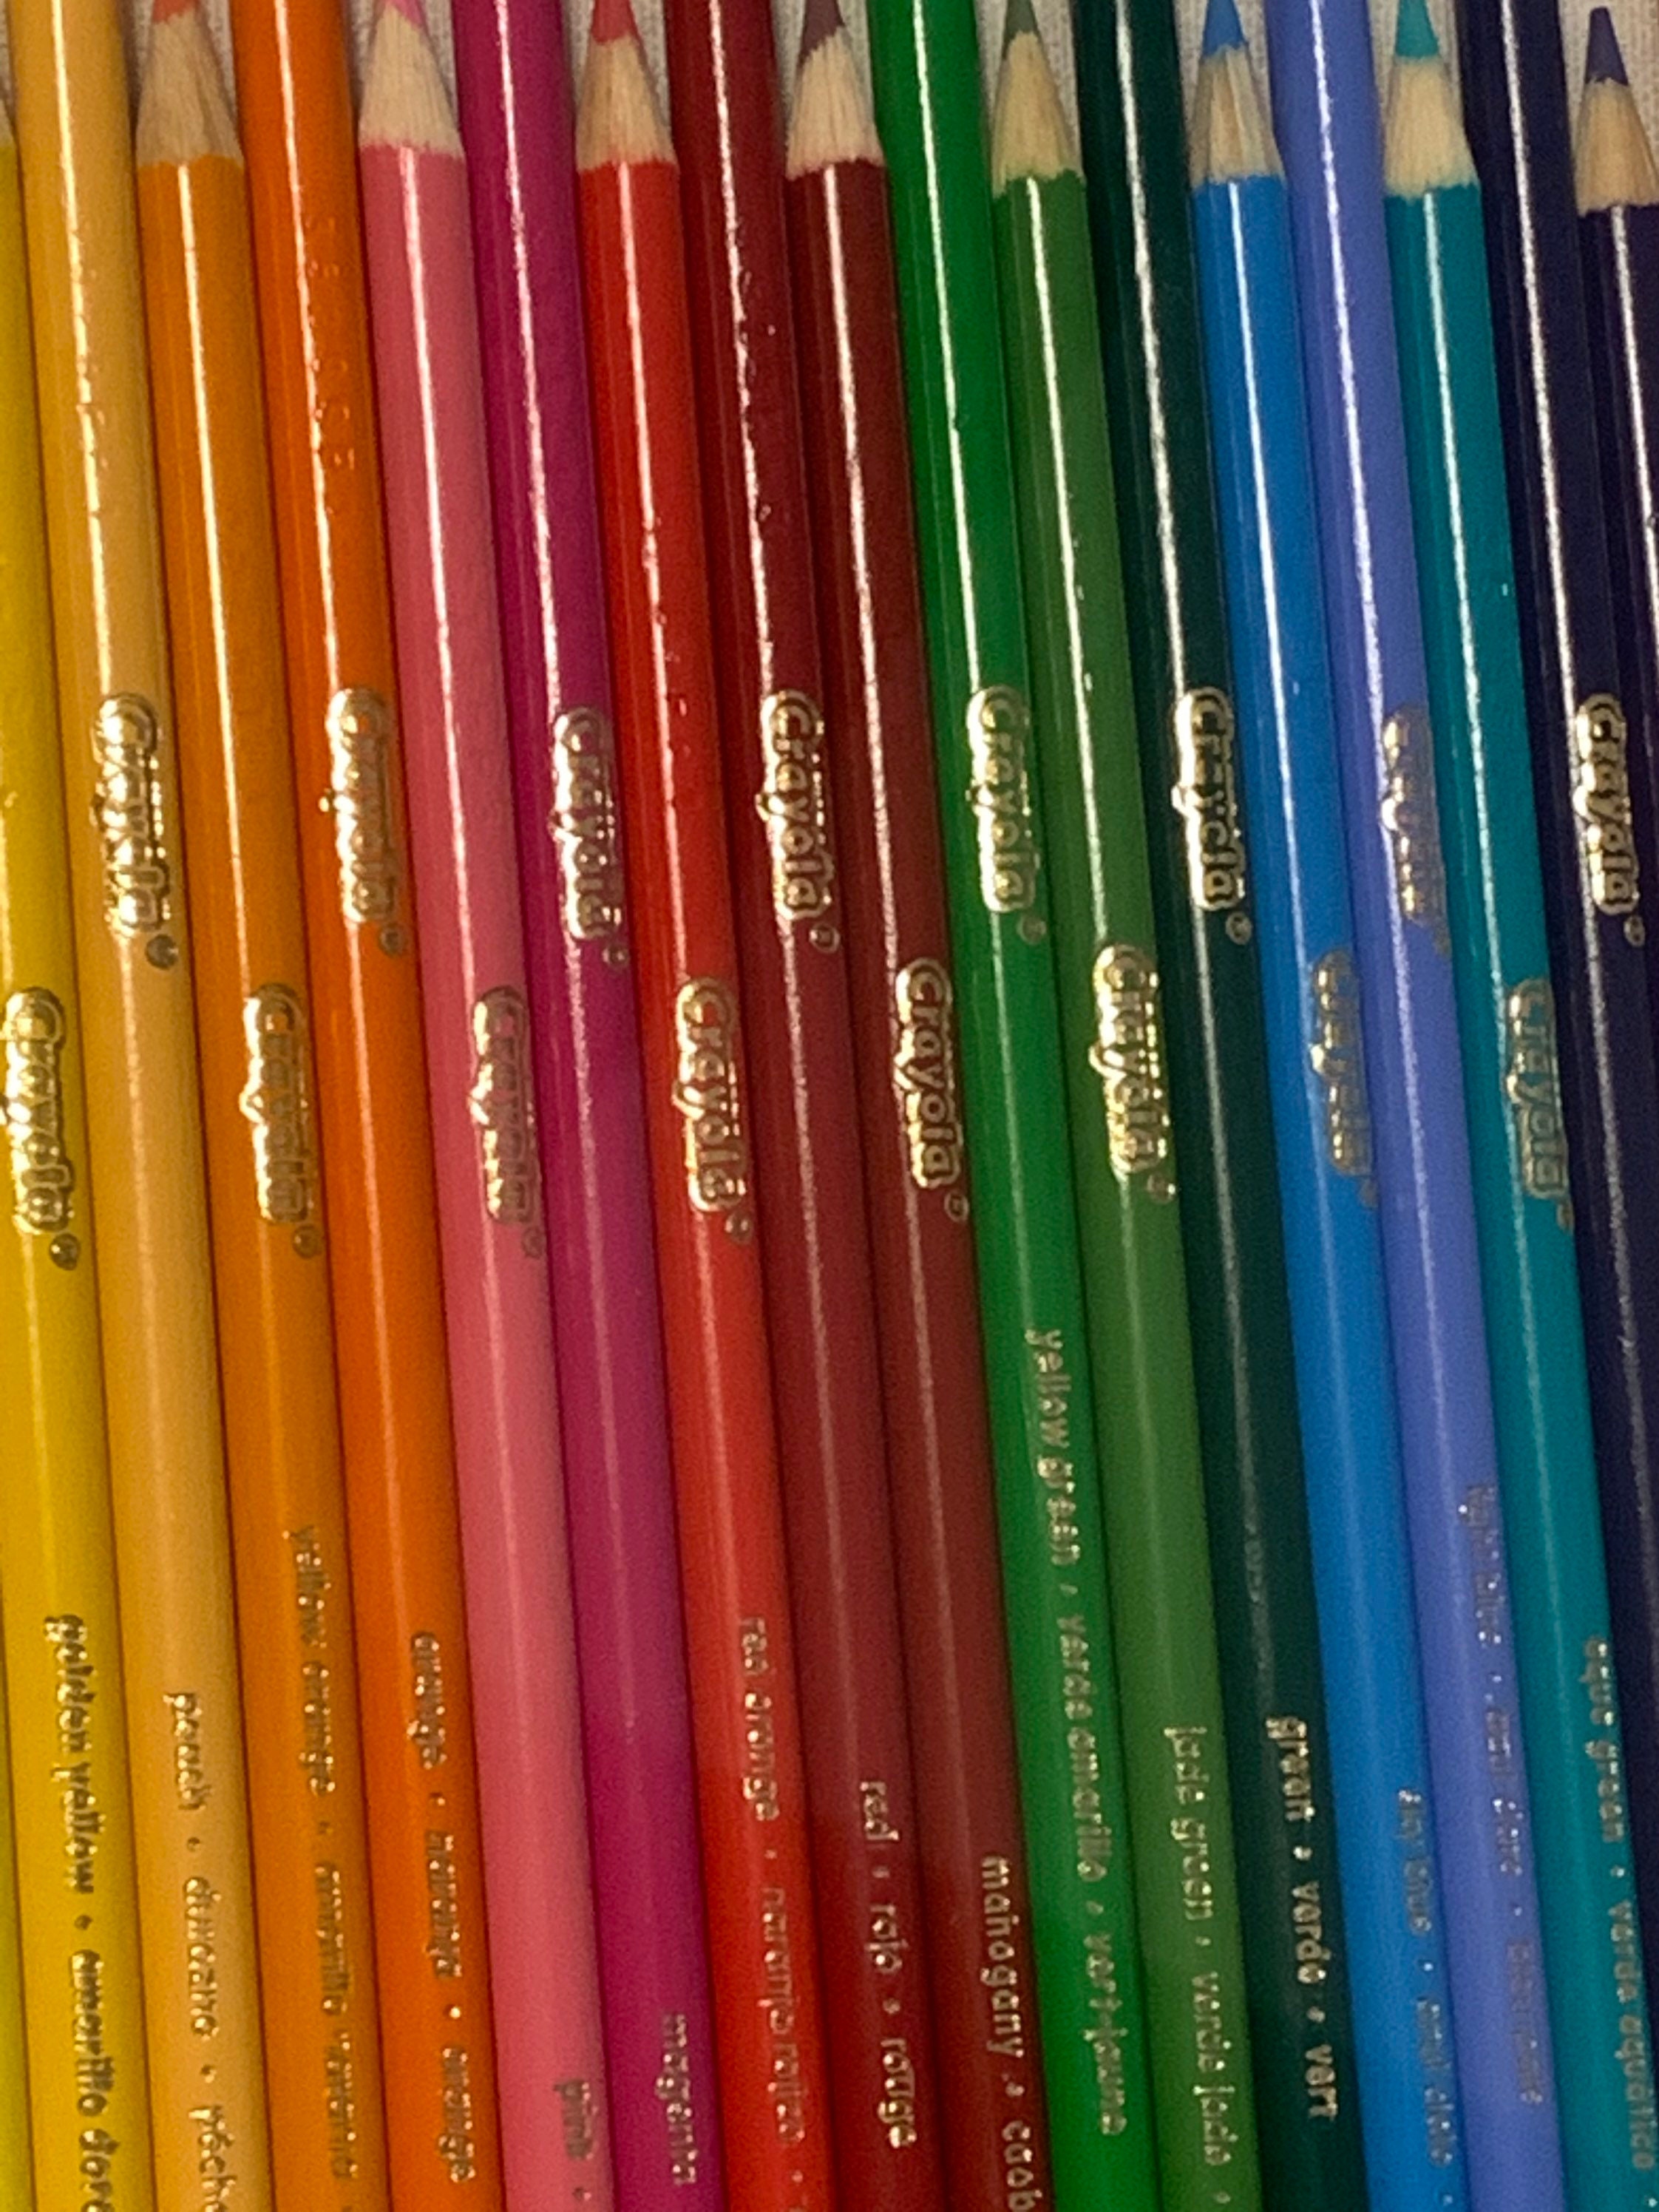 Crayola Colored Pencils Shadowbox Frame 9 X 9 | Etsy